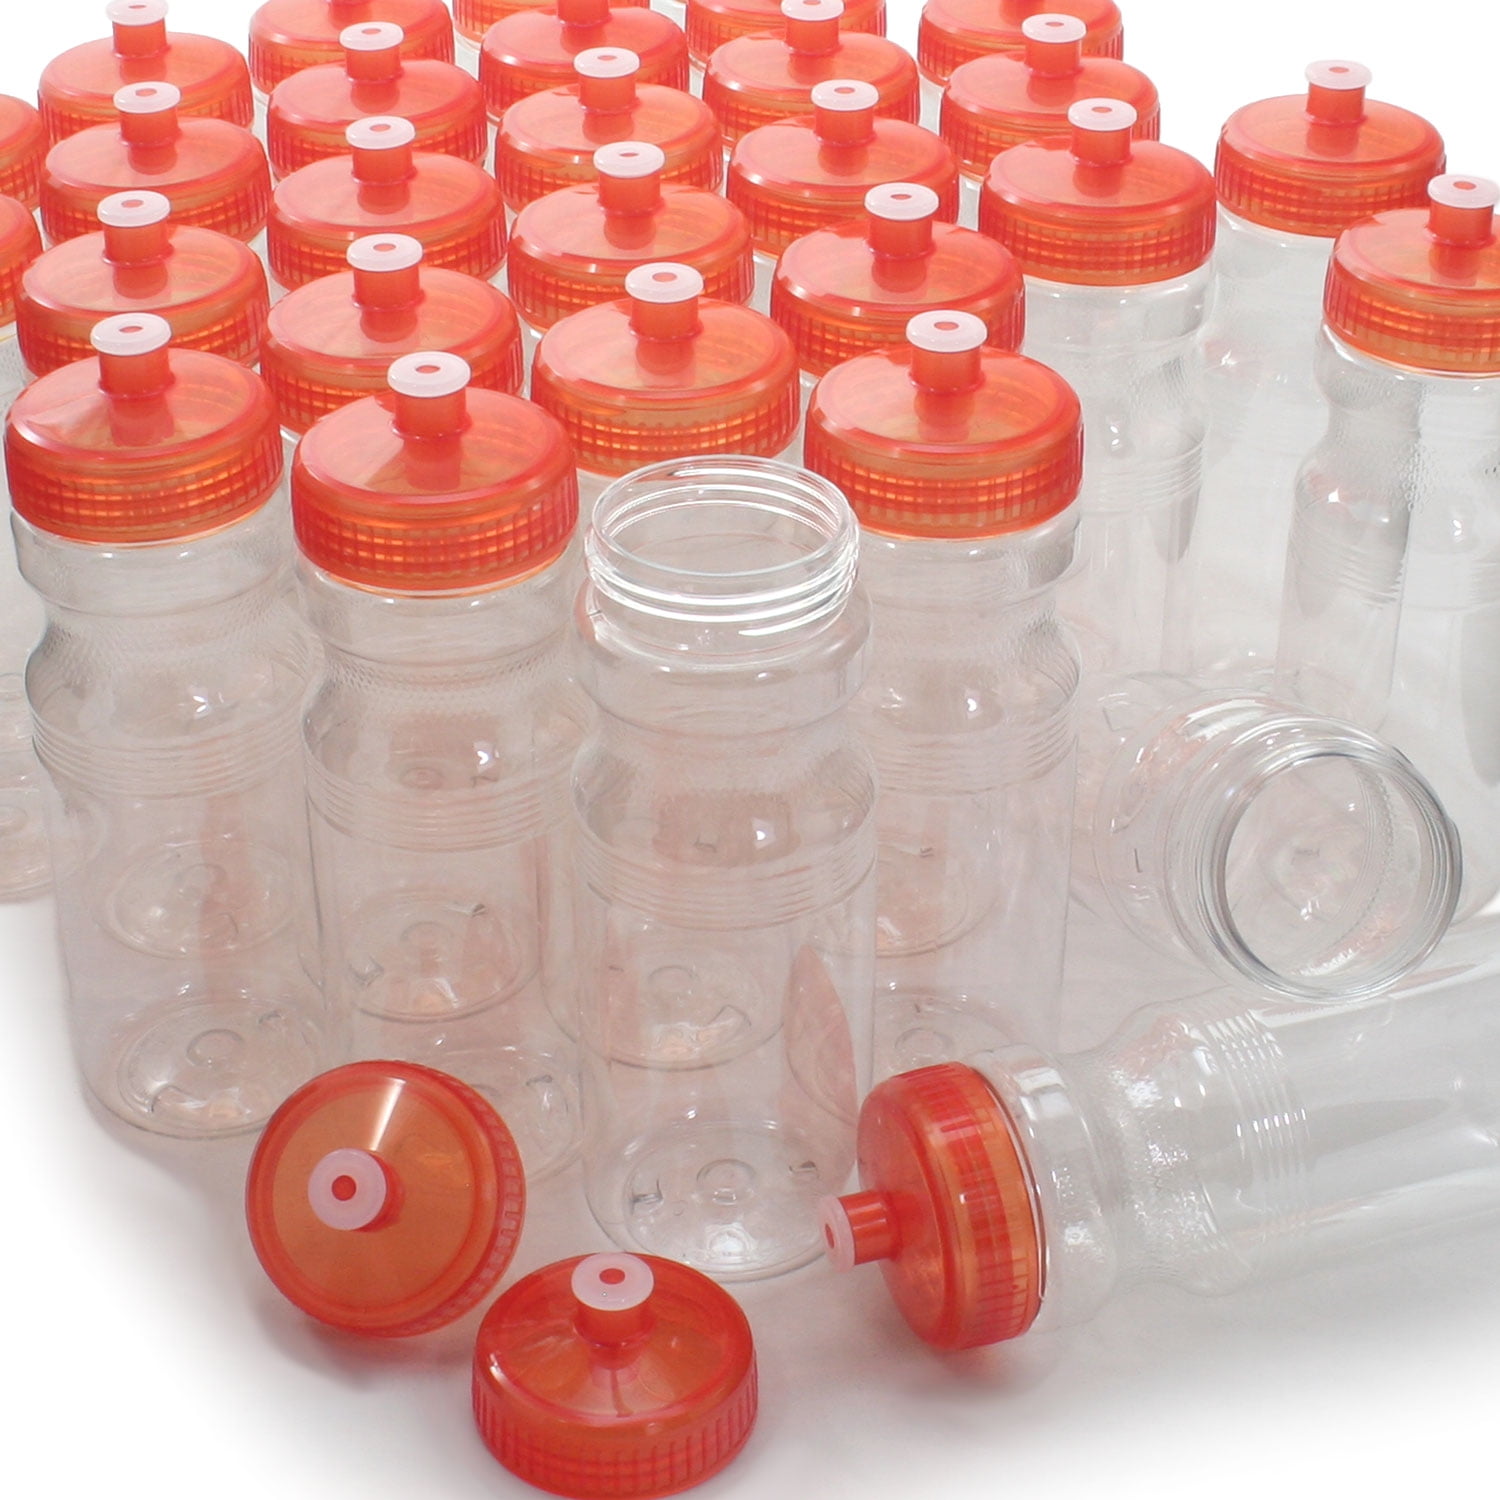 CSBD 24 oz. Bulk Water Bottles, 10 Pack, Made in USA, Blank Plastic  Reusable Water Bottles for Gym, …See more CSBD 24 oz. Bulk Water Bottles,  10 Pack